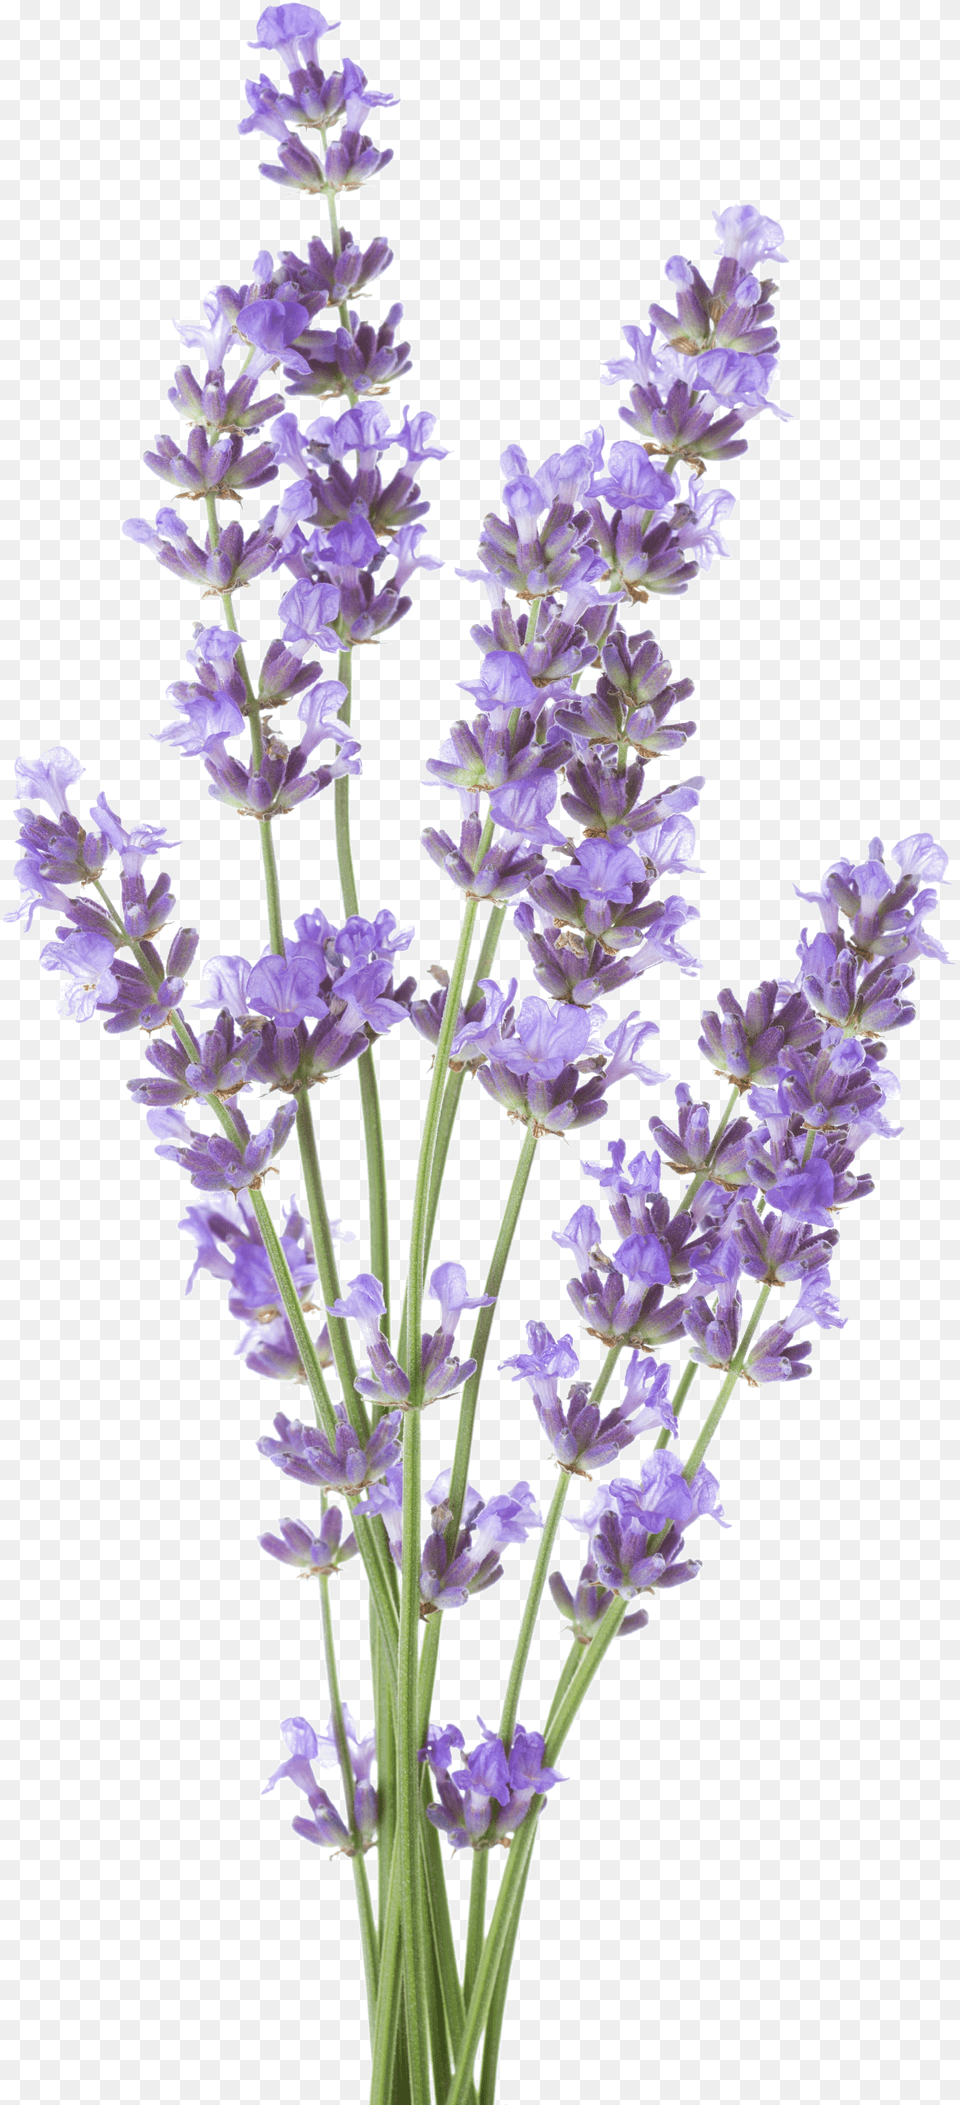 Edible Flowers Transparent Background Lavender Transparent Png Image